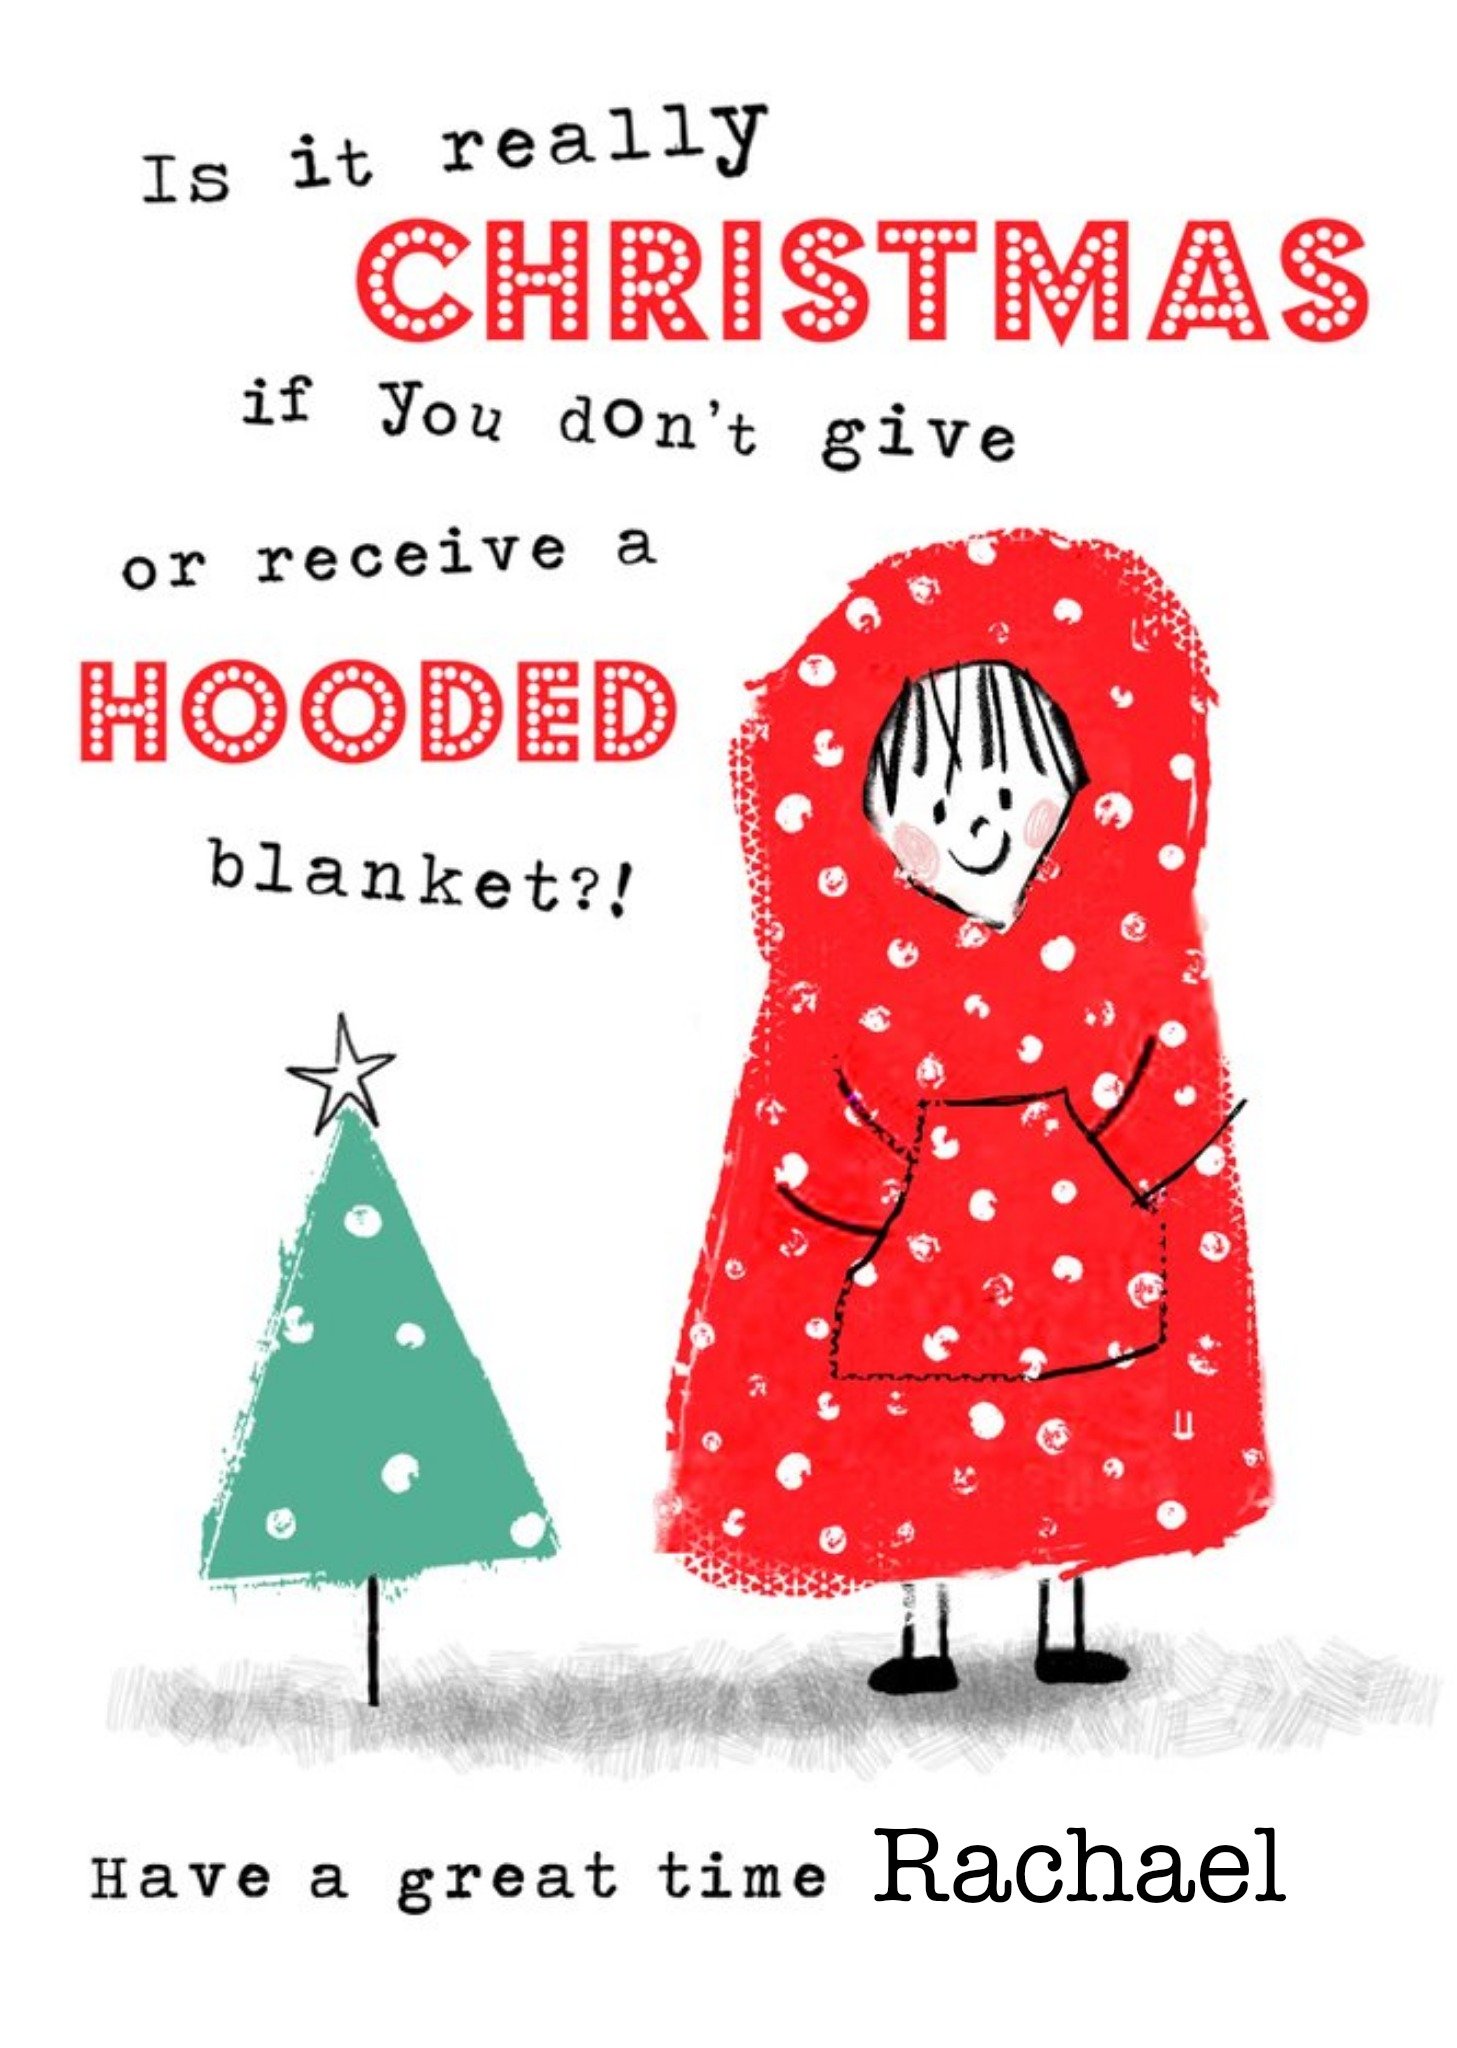 Moonpig A Hooded Blanket Christmas Card Ecard